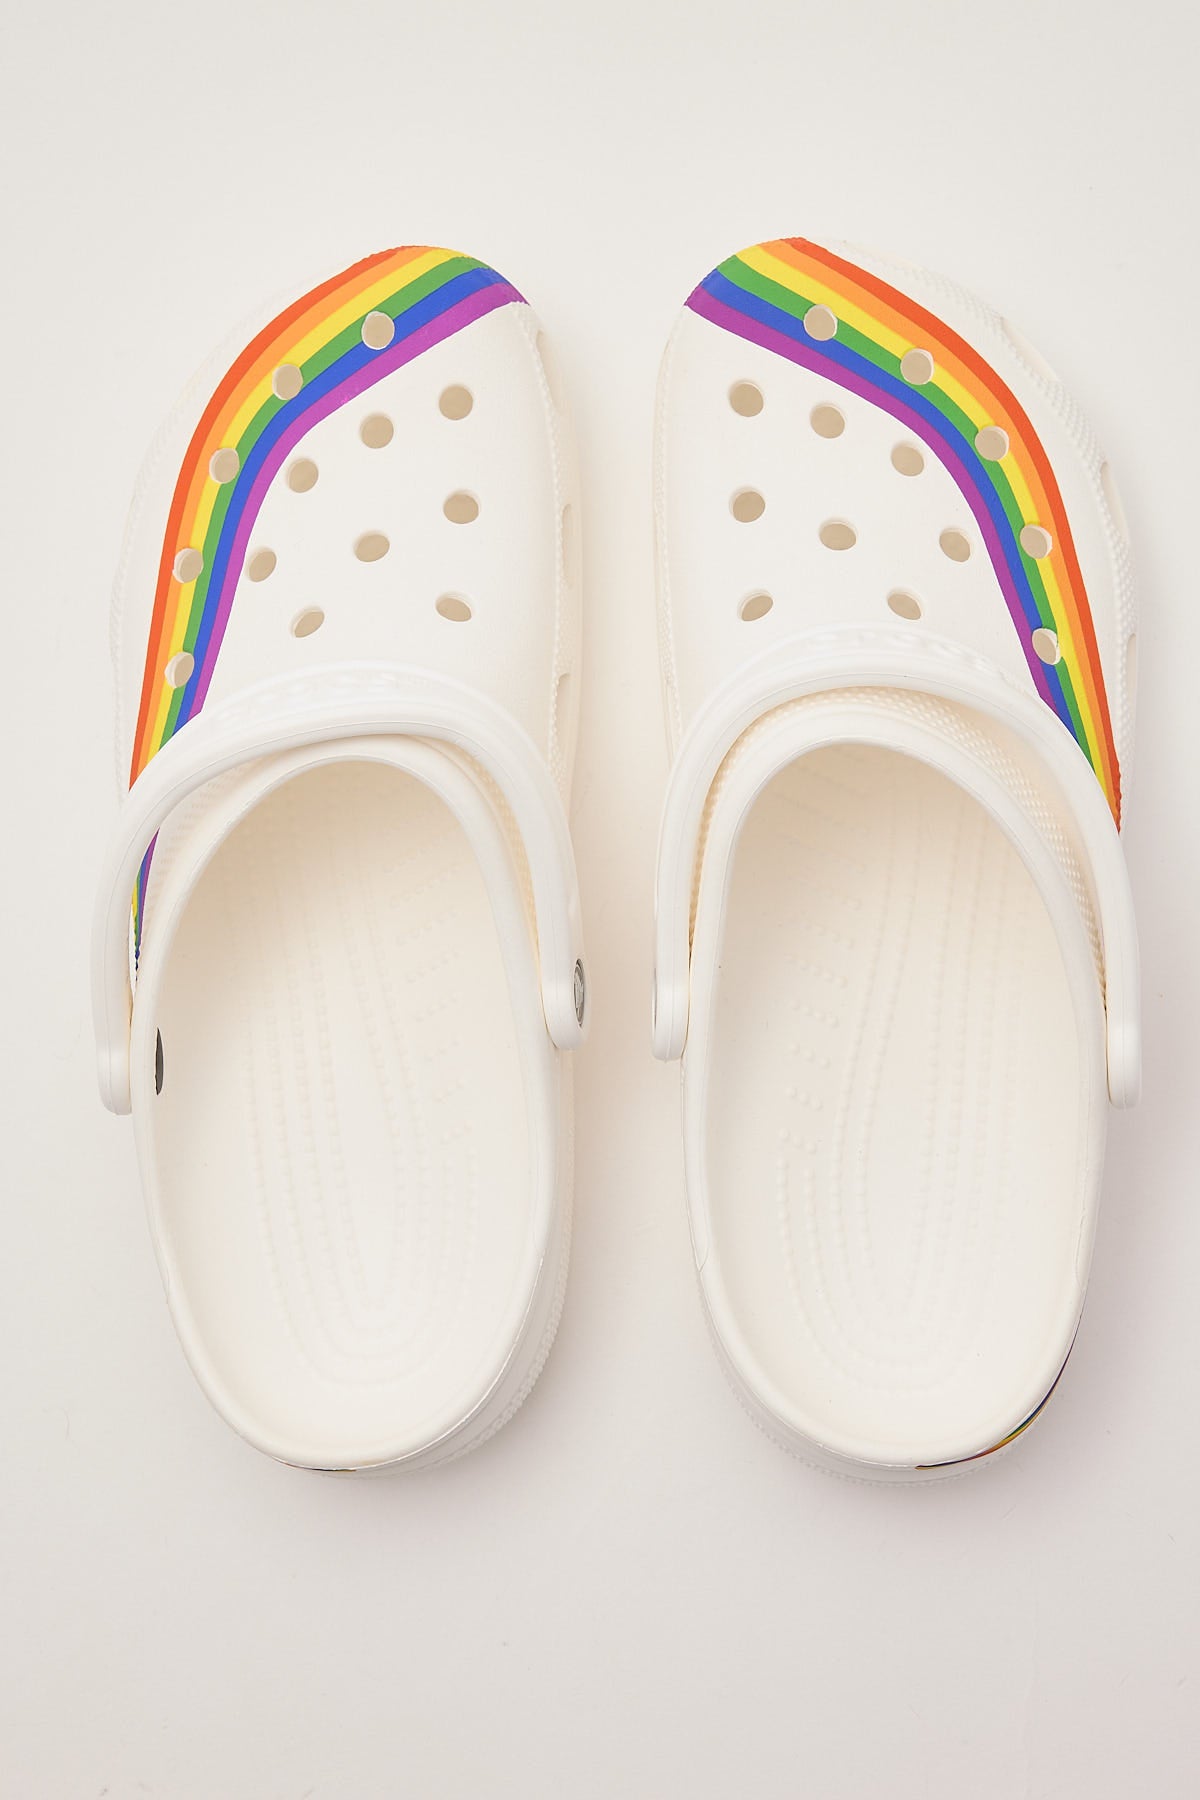 Crocs Mens Classic Rainbow Dye Clog White